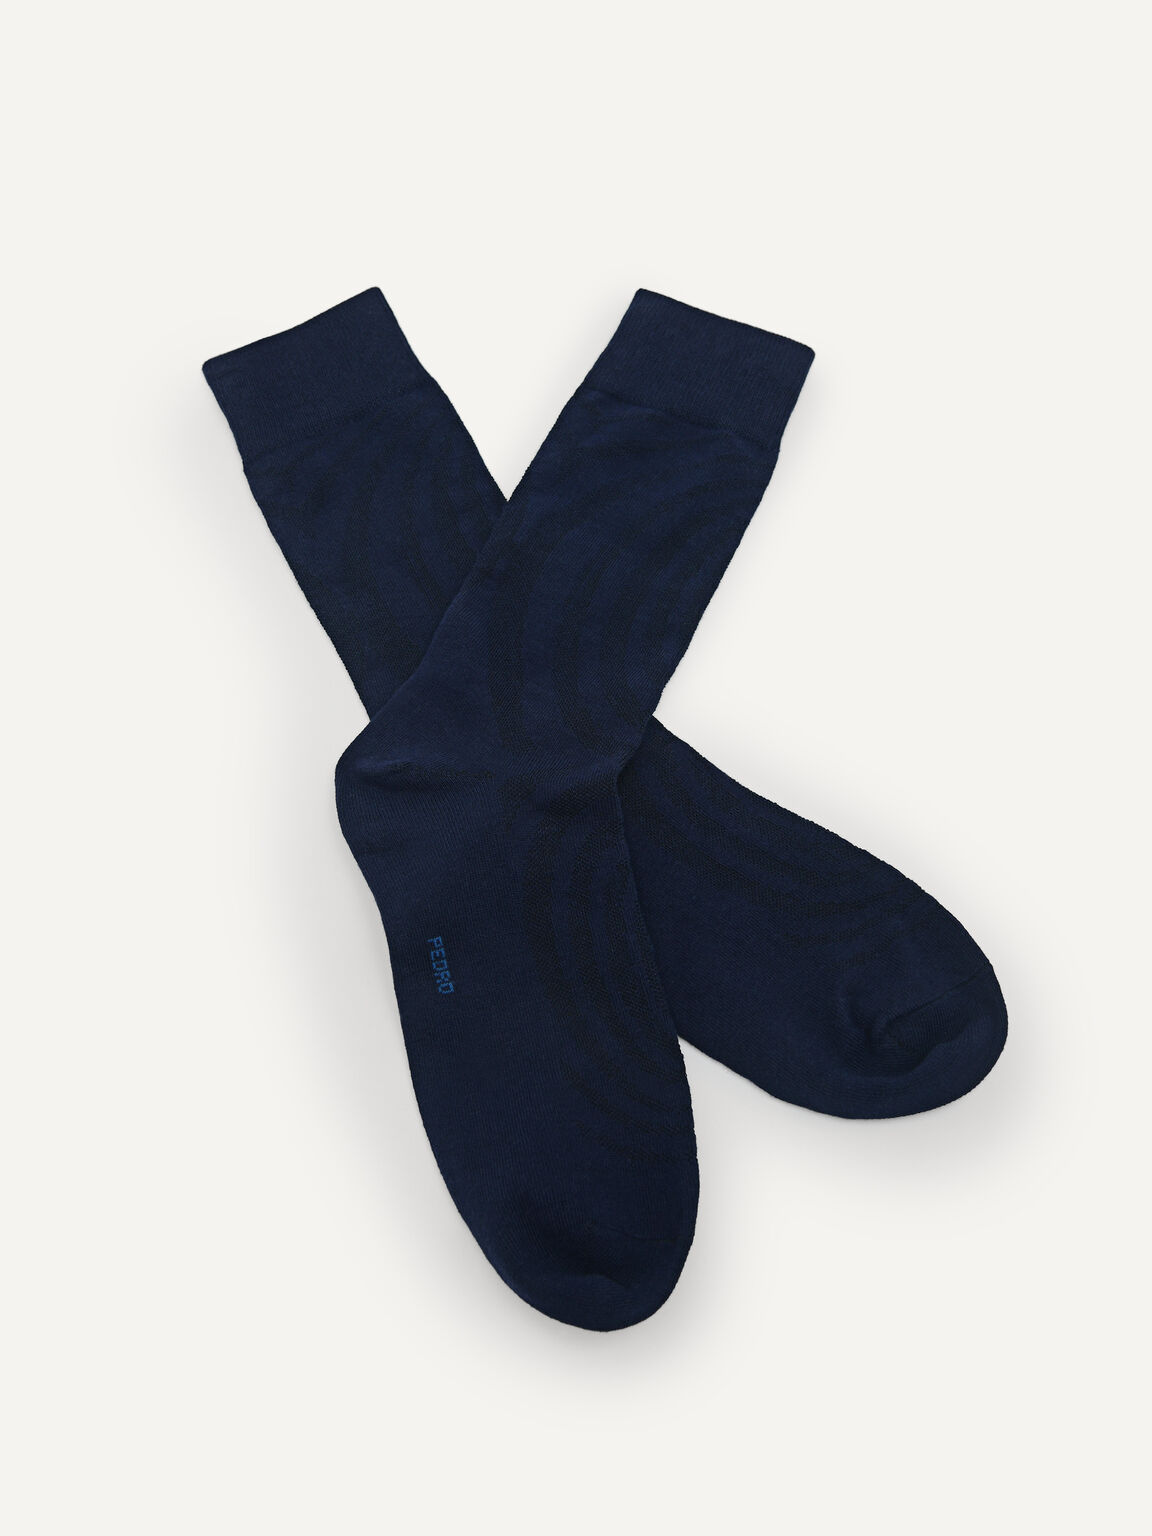 Men's Cotton Socks, Navy